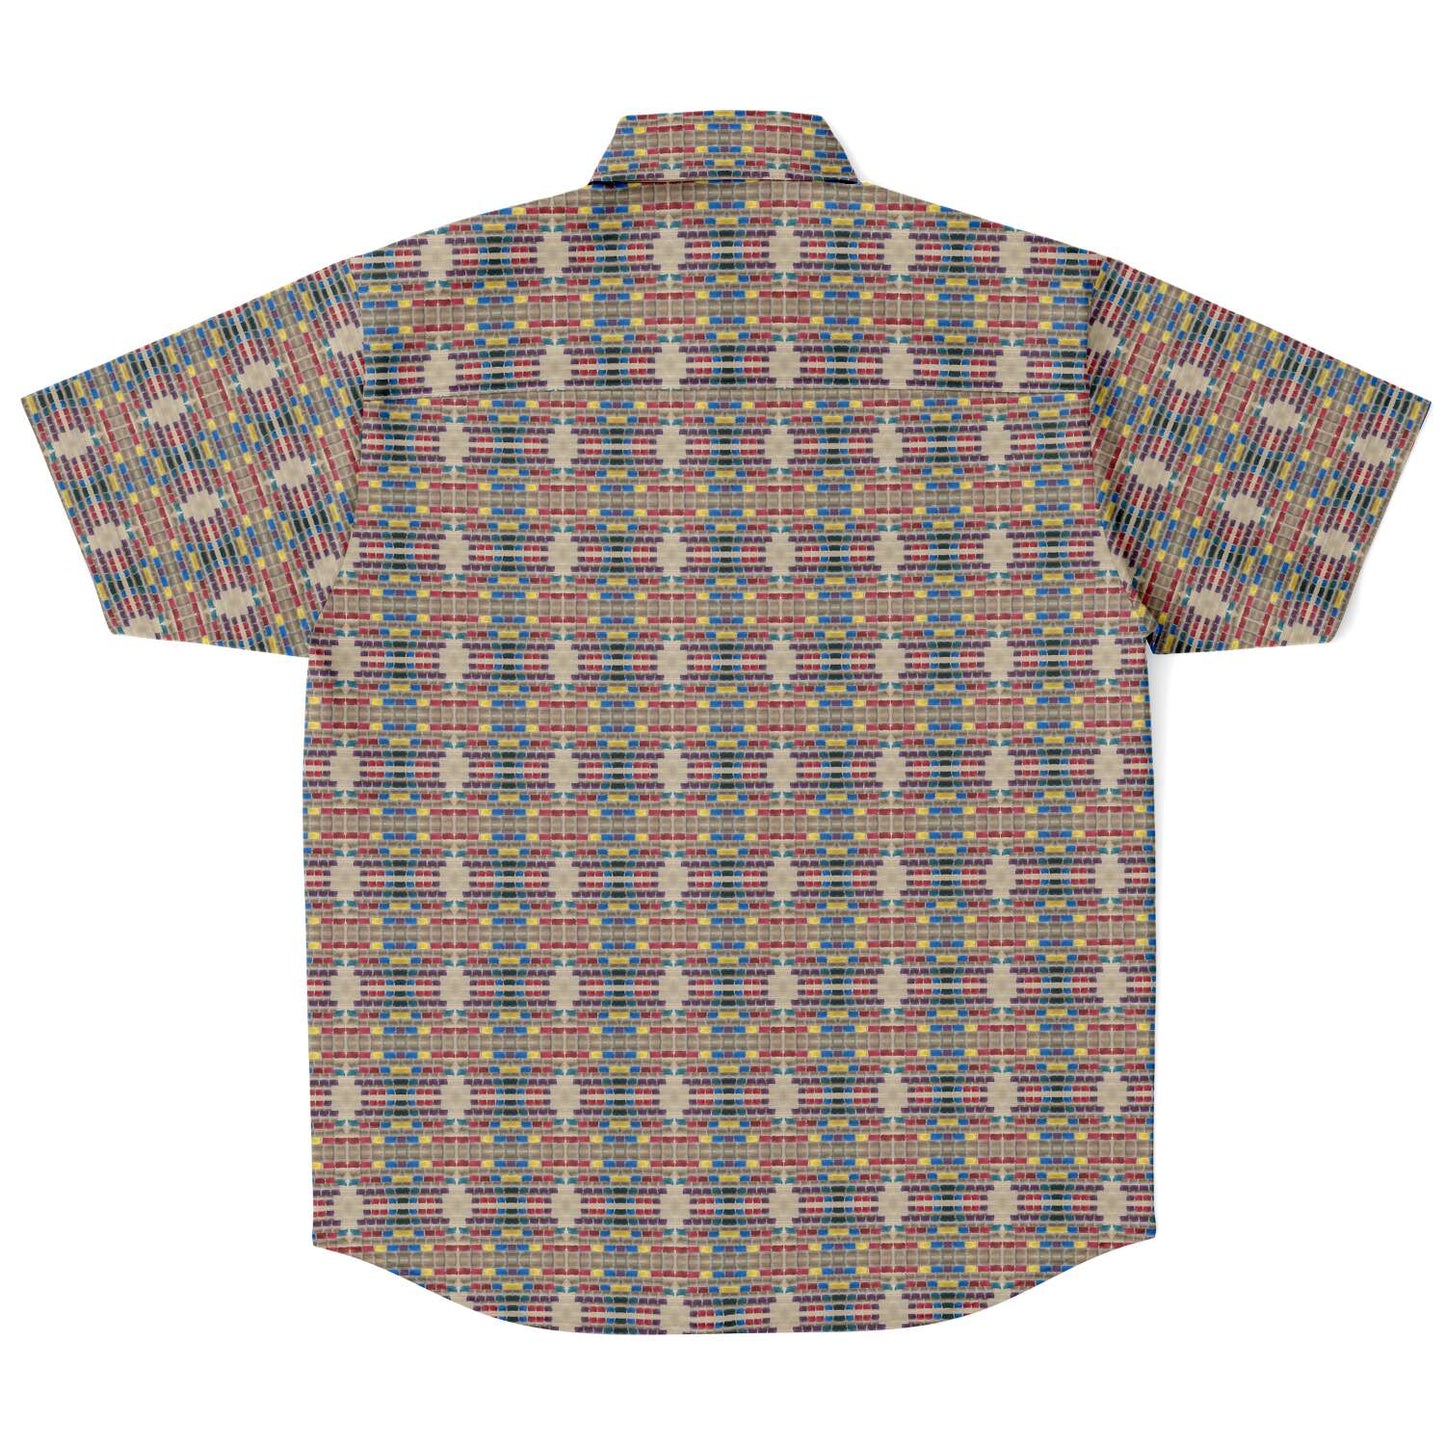 Short Sleeve Button Down Shirt (Mosaic)